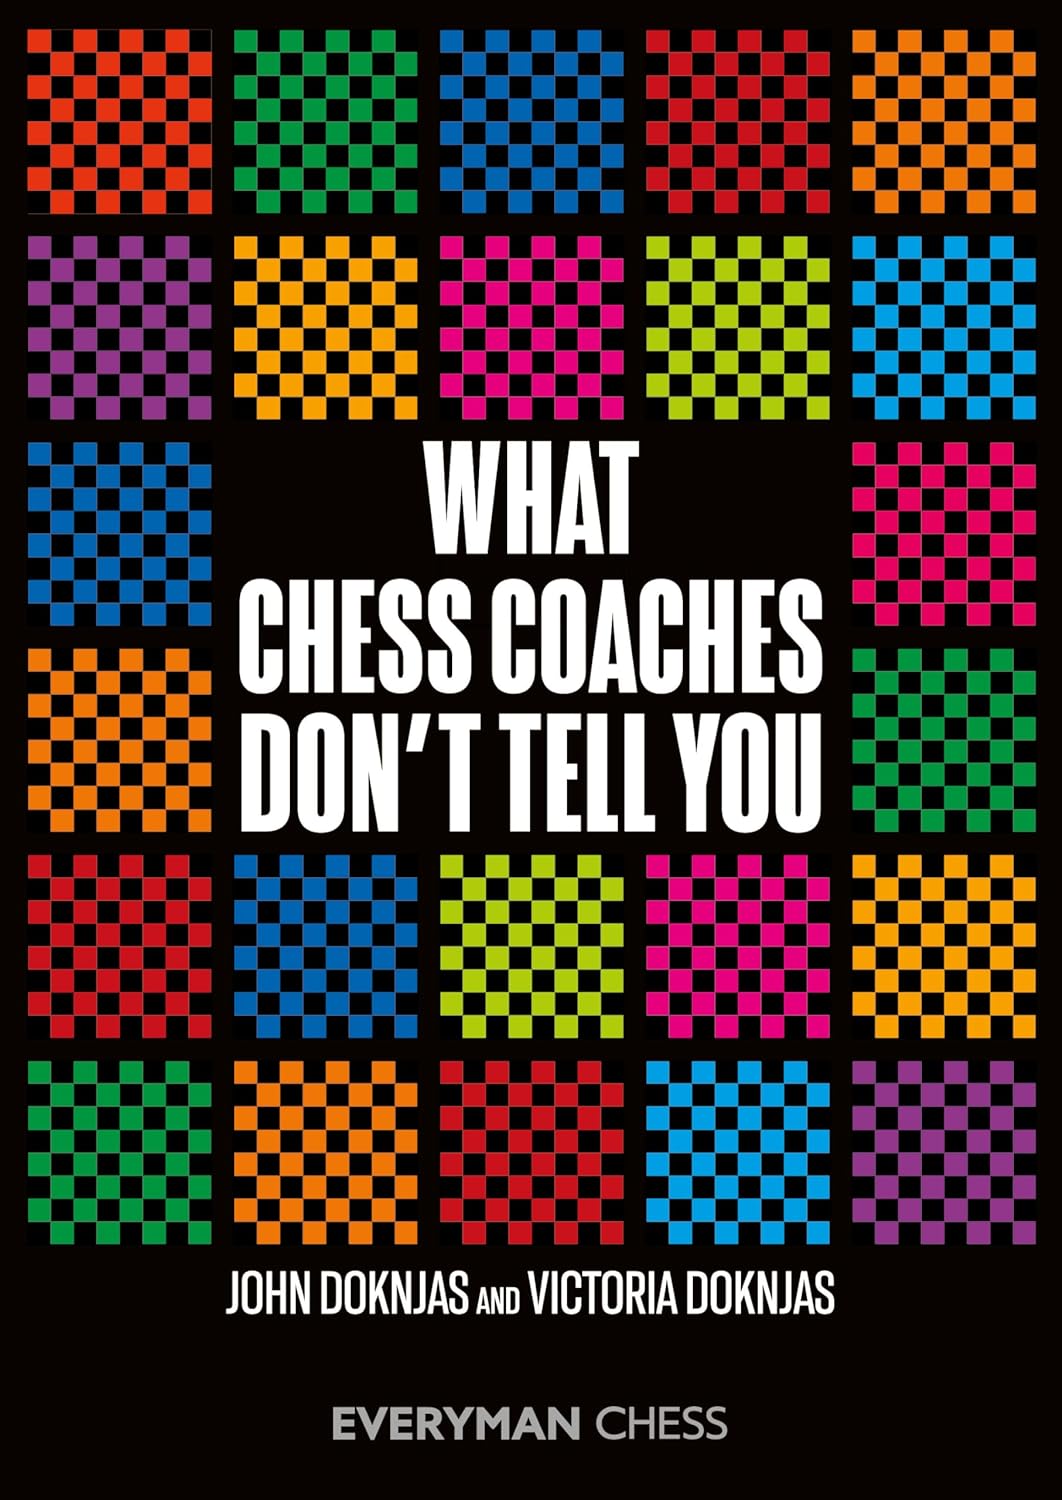 What Chess Coaches Don't Tell You, John Doknjas and Victoria Doknjas, Everyman Chess, ISBN-13 ‏ : ‎ 978-1781946541